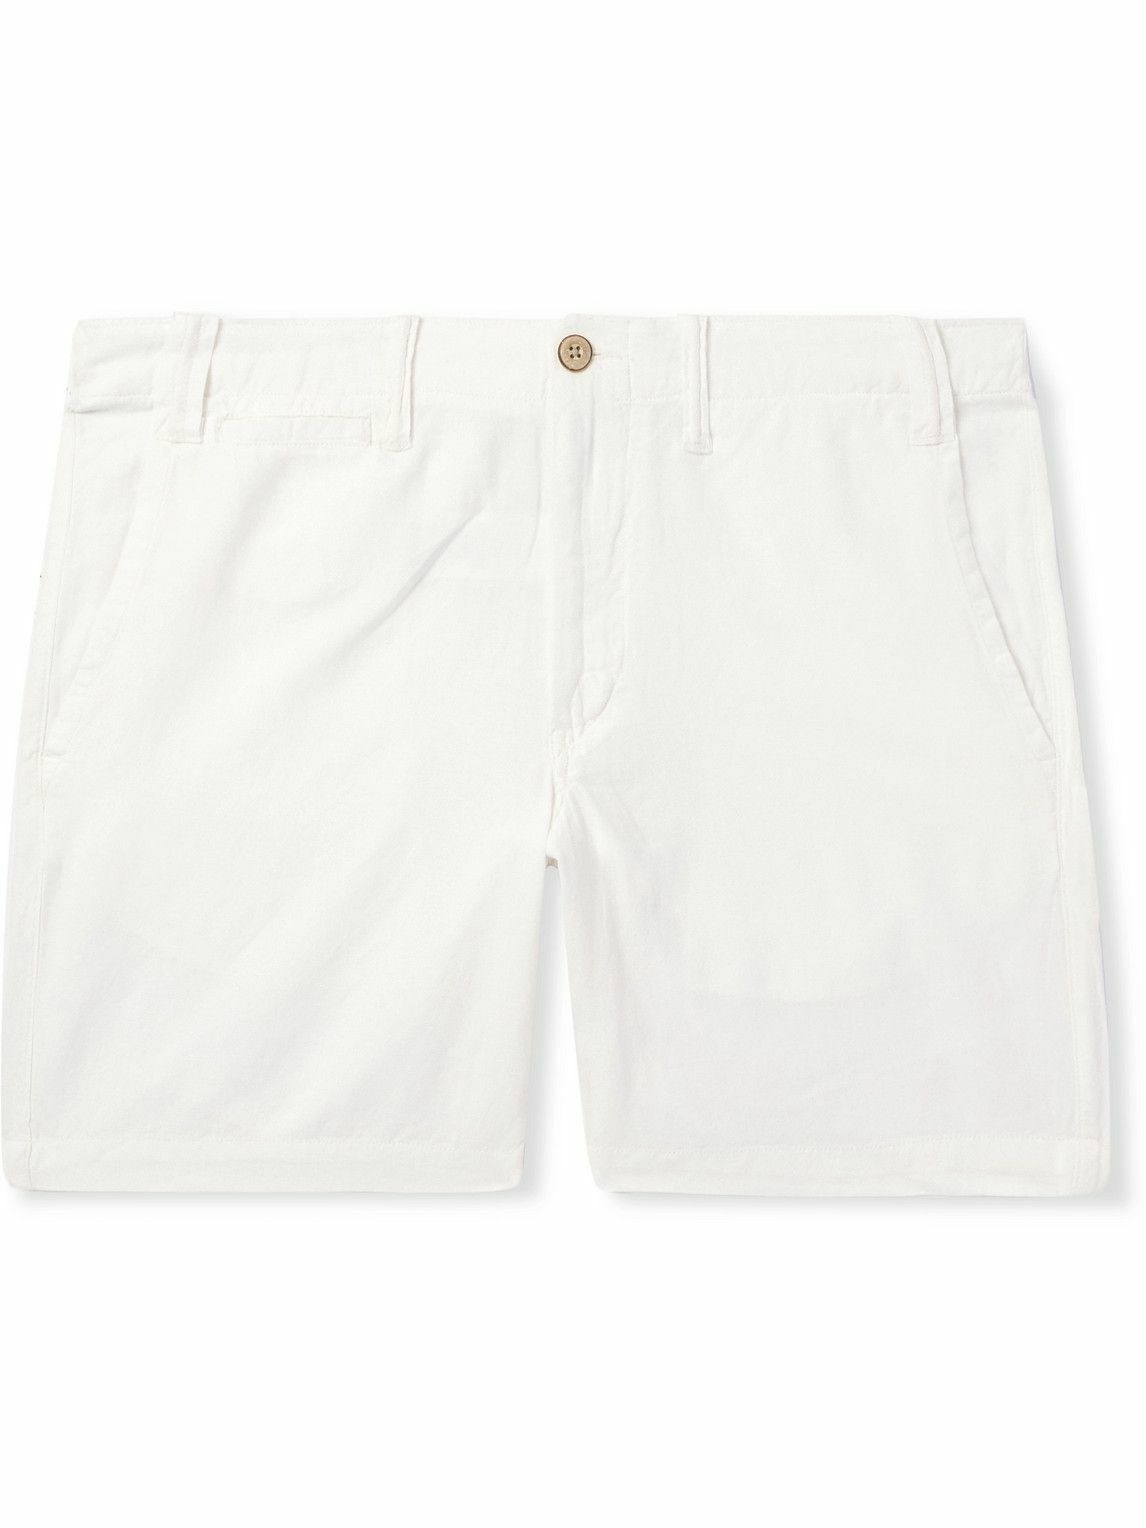 Polo Ralph Lauren 32/1 Stretch Twill Men's Shorts White 710862778001